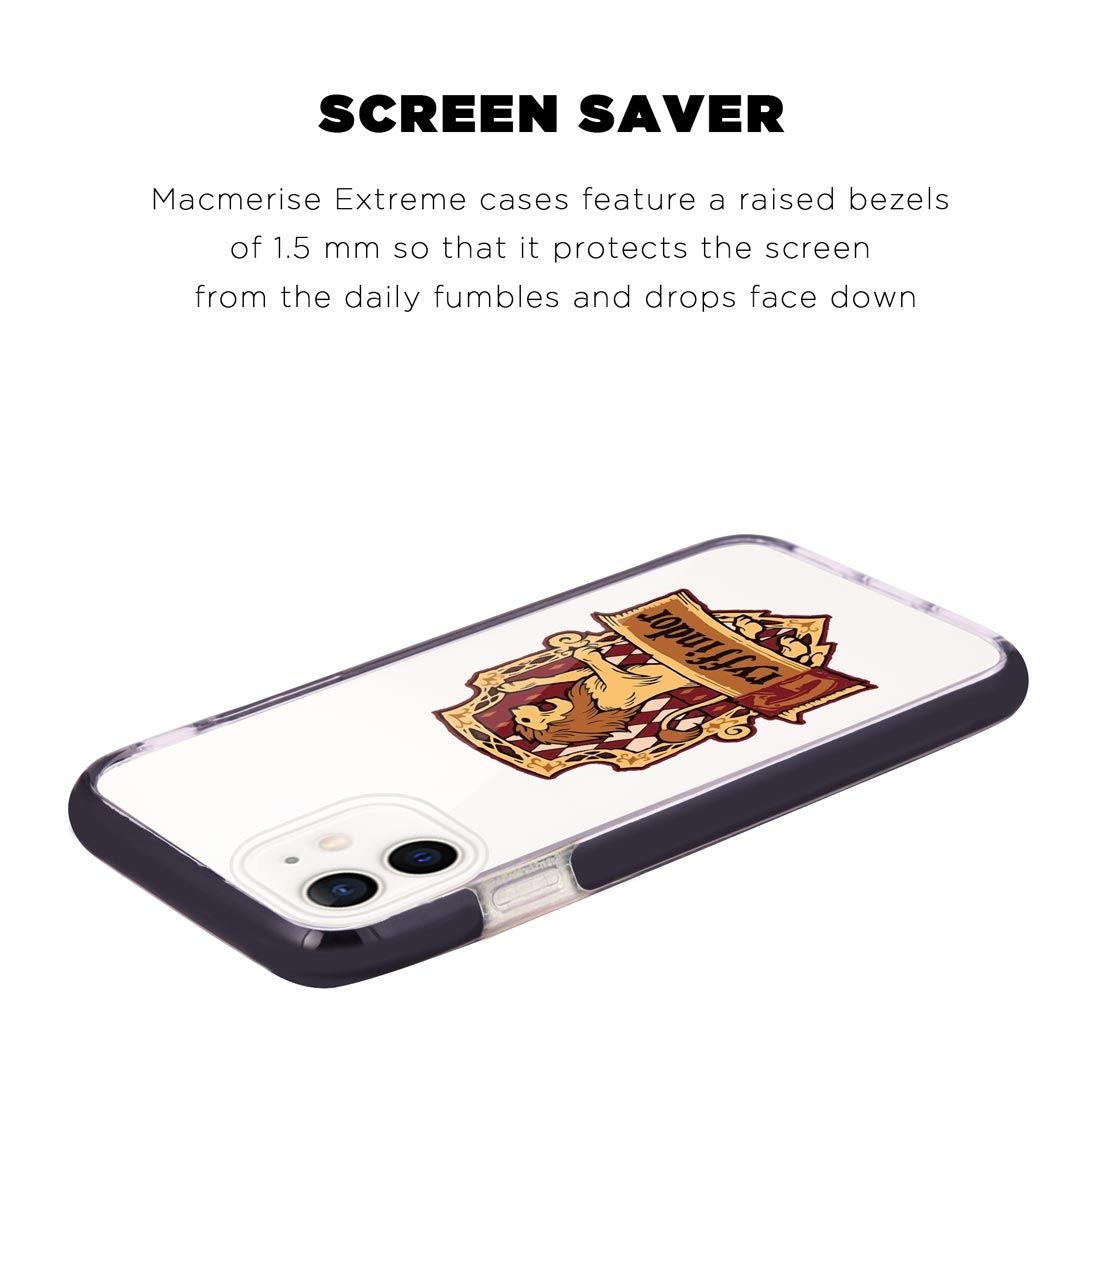 Crest Gryffindor - Extreme Case for iPhone 12